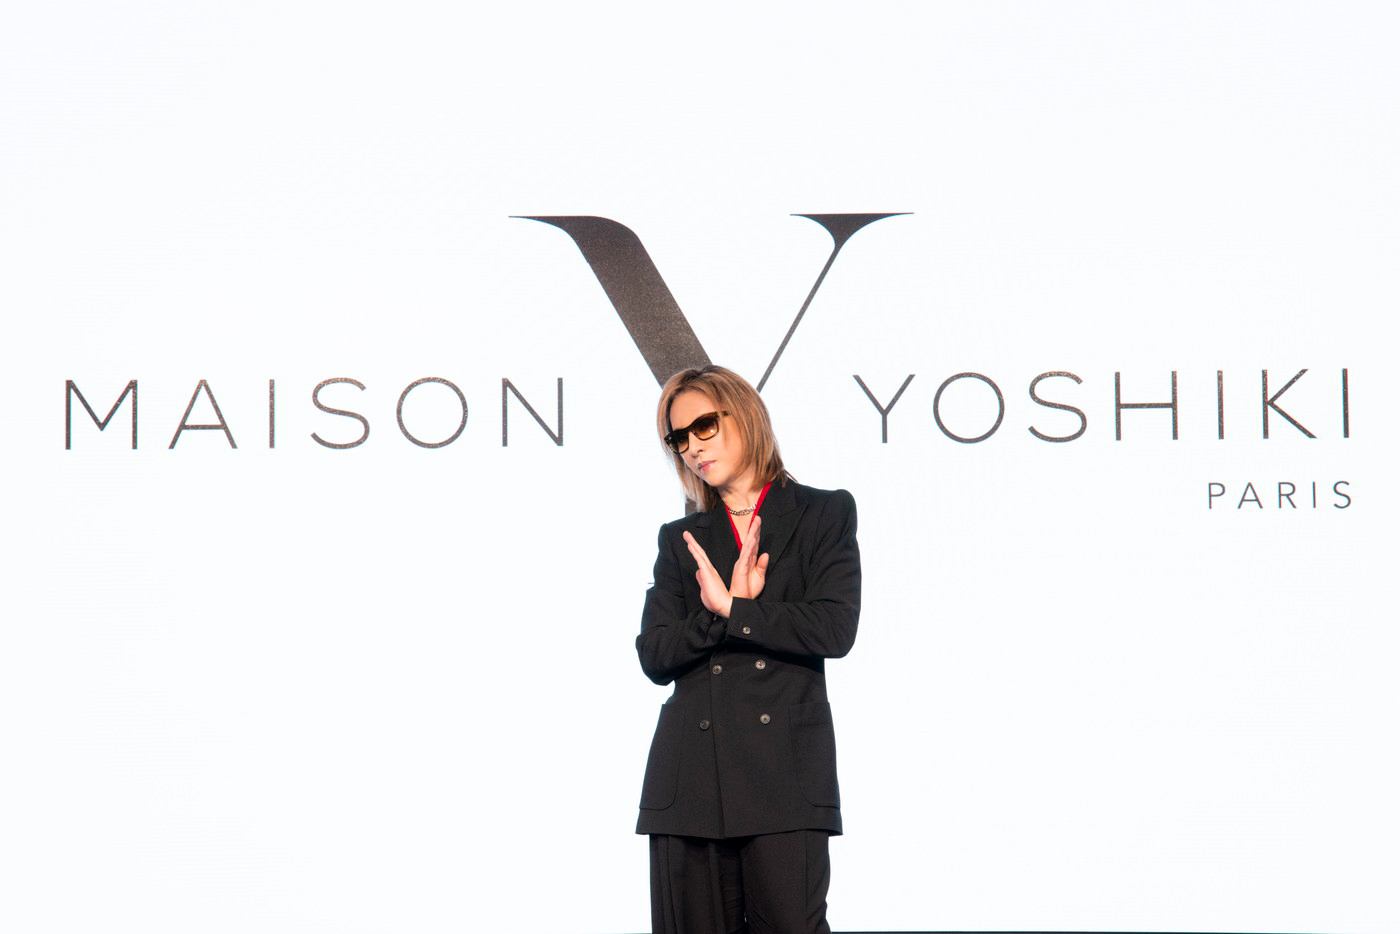 YOSHIKI、ミラノから凱旋帰国！ 自身のハイファッションブランド「MAISON YOSHIKI PARIS」のあらたな展開を発表